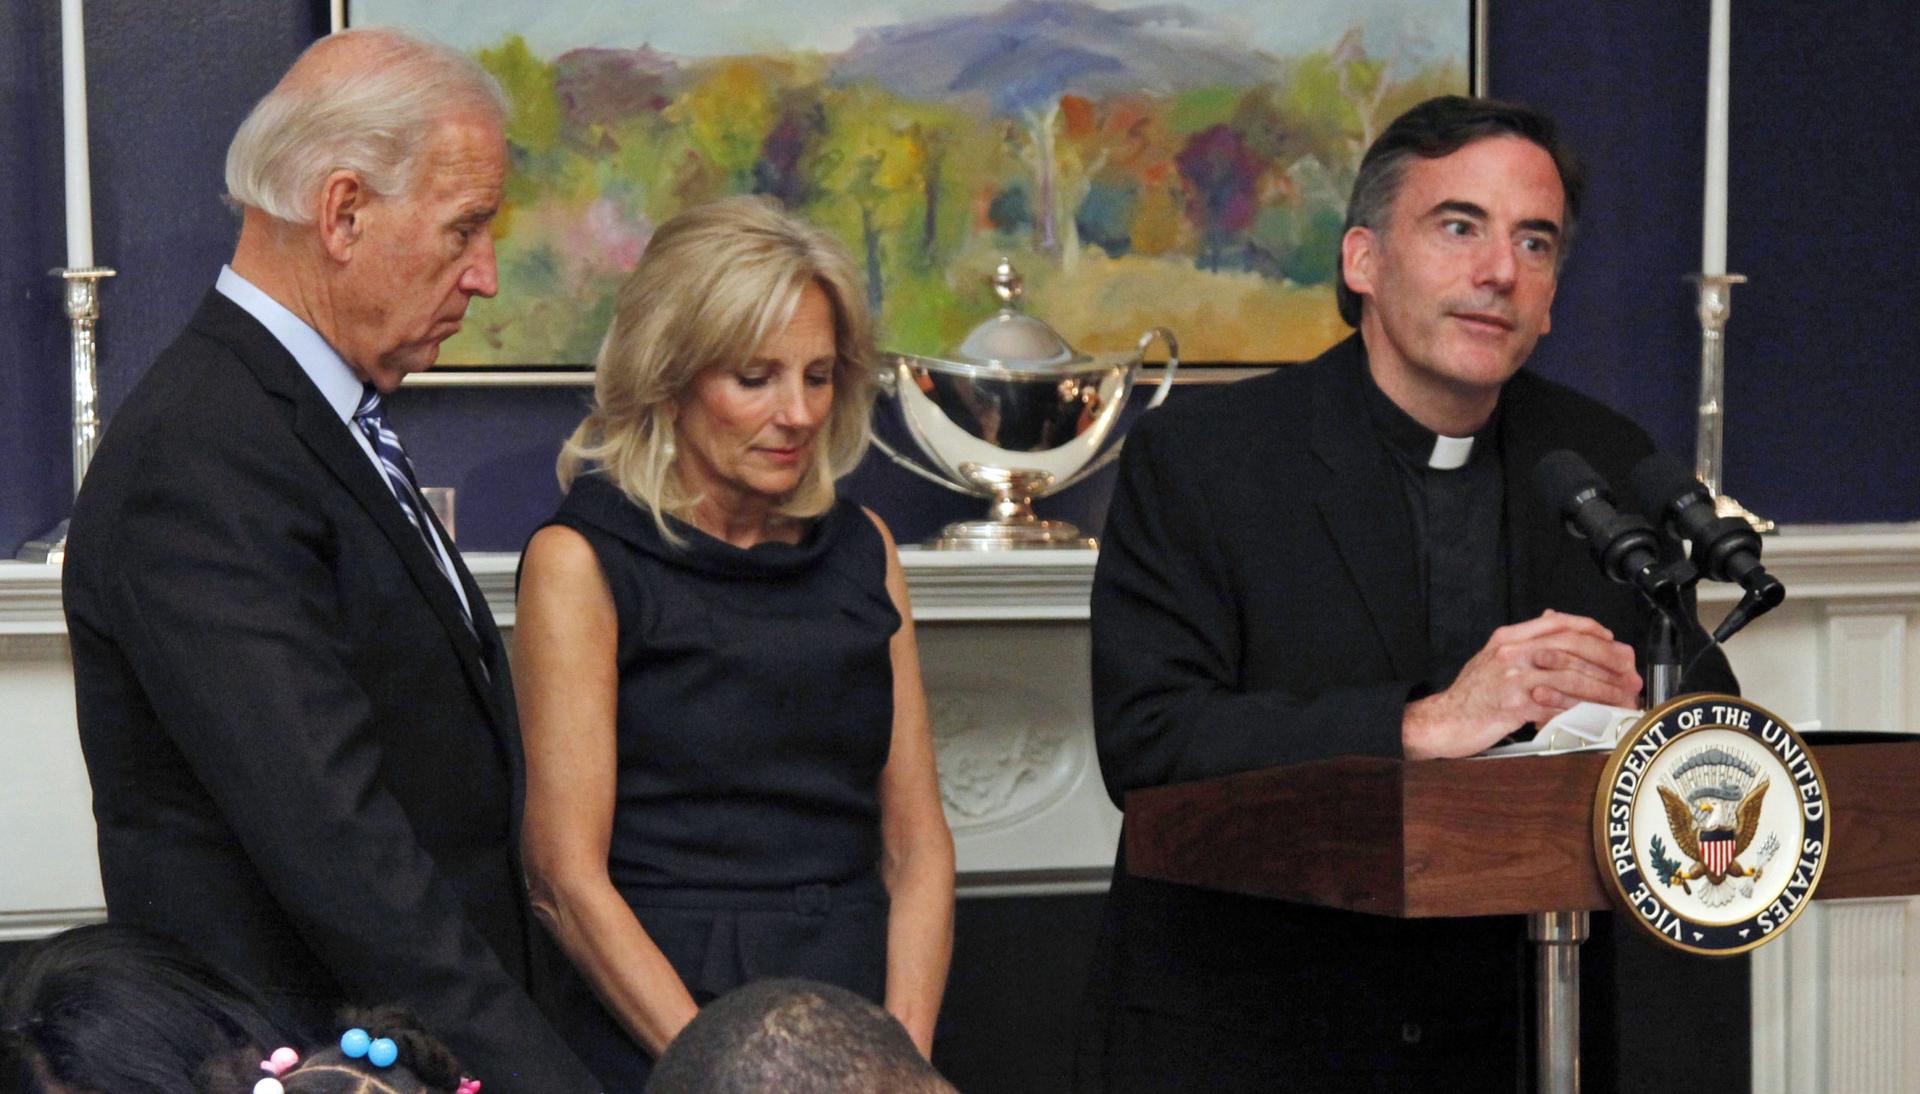 Biden inauguration priest resigns California university post